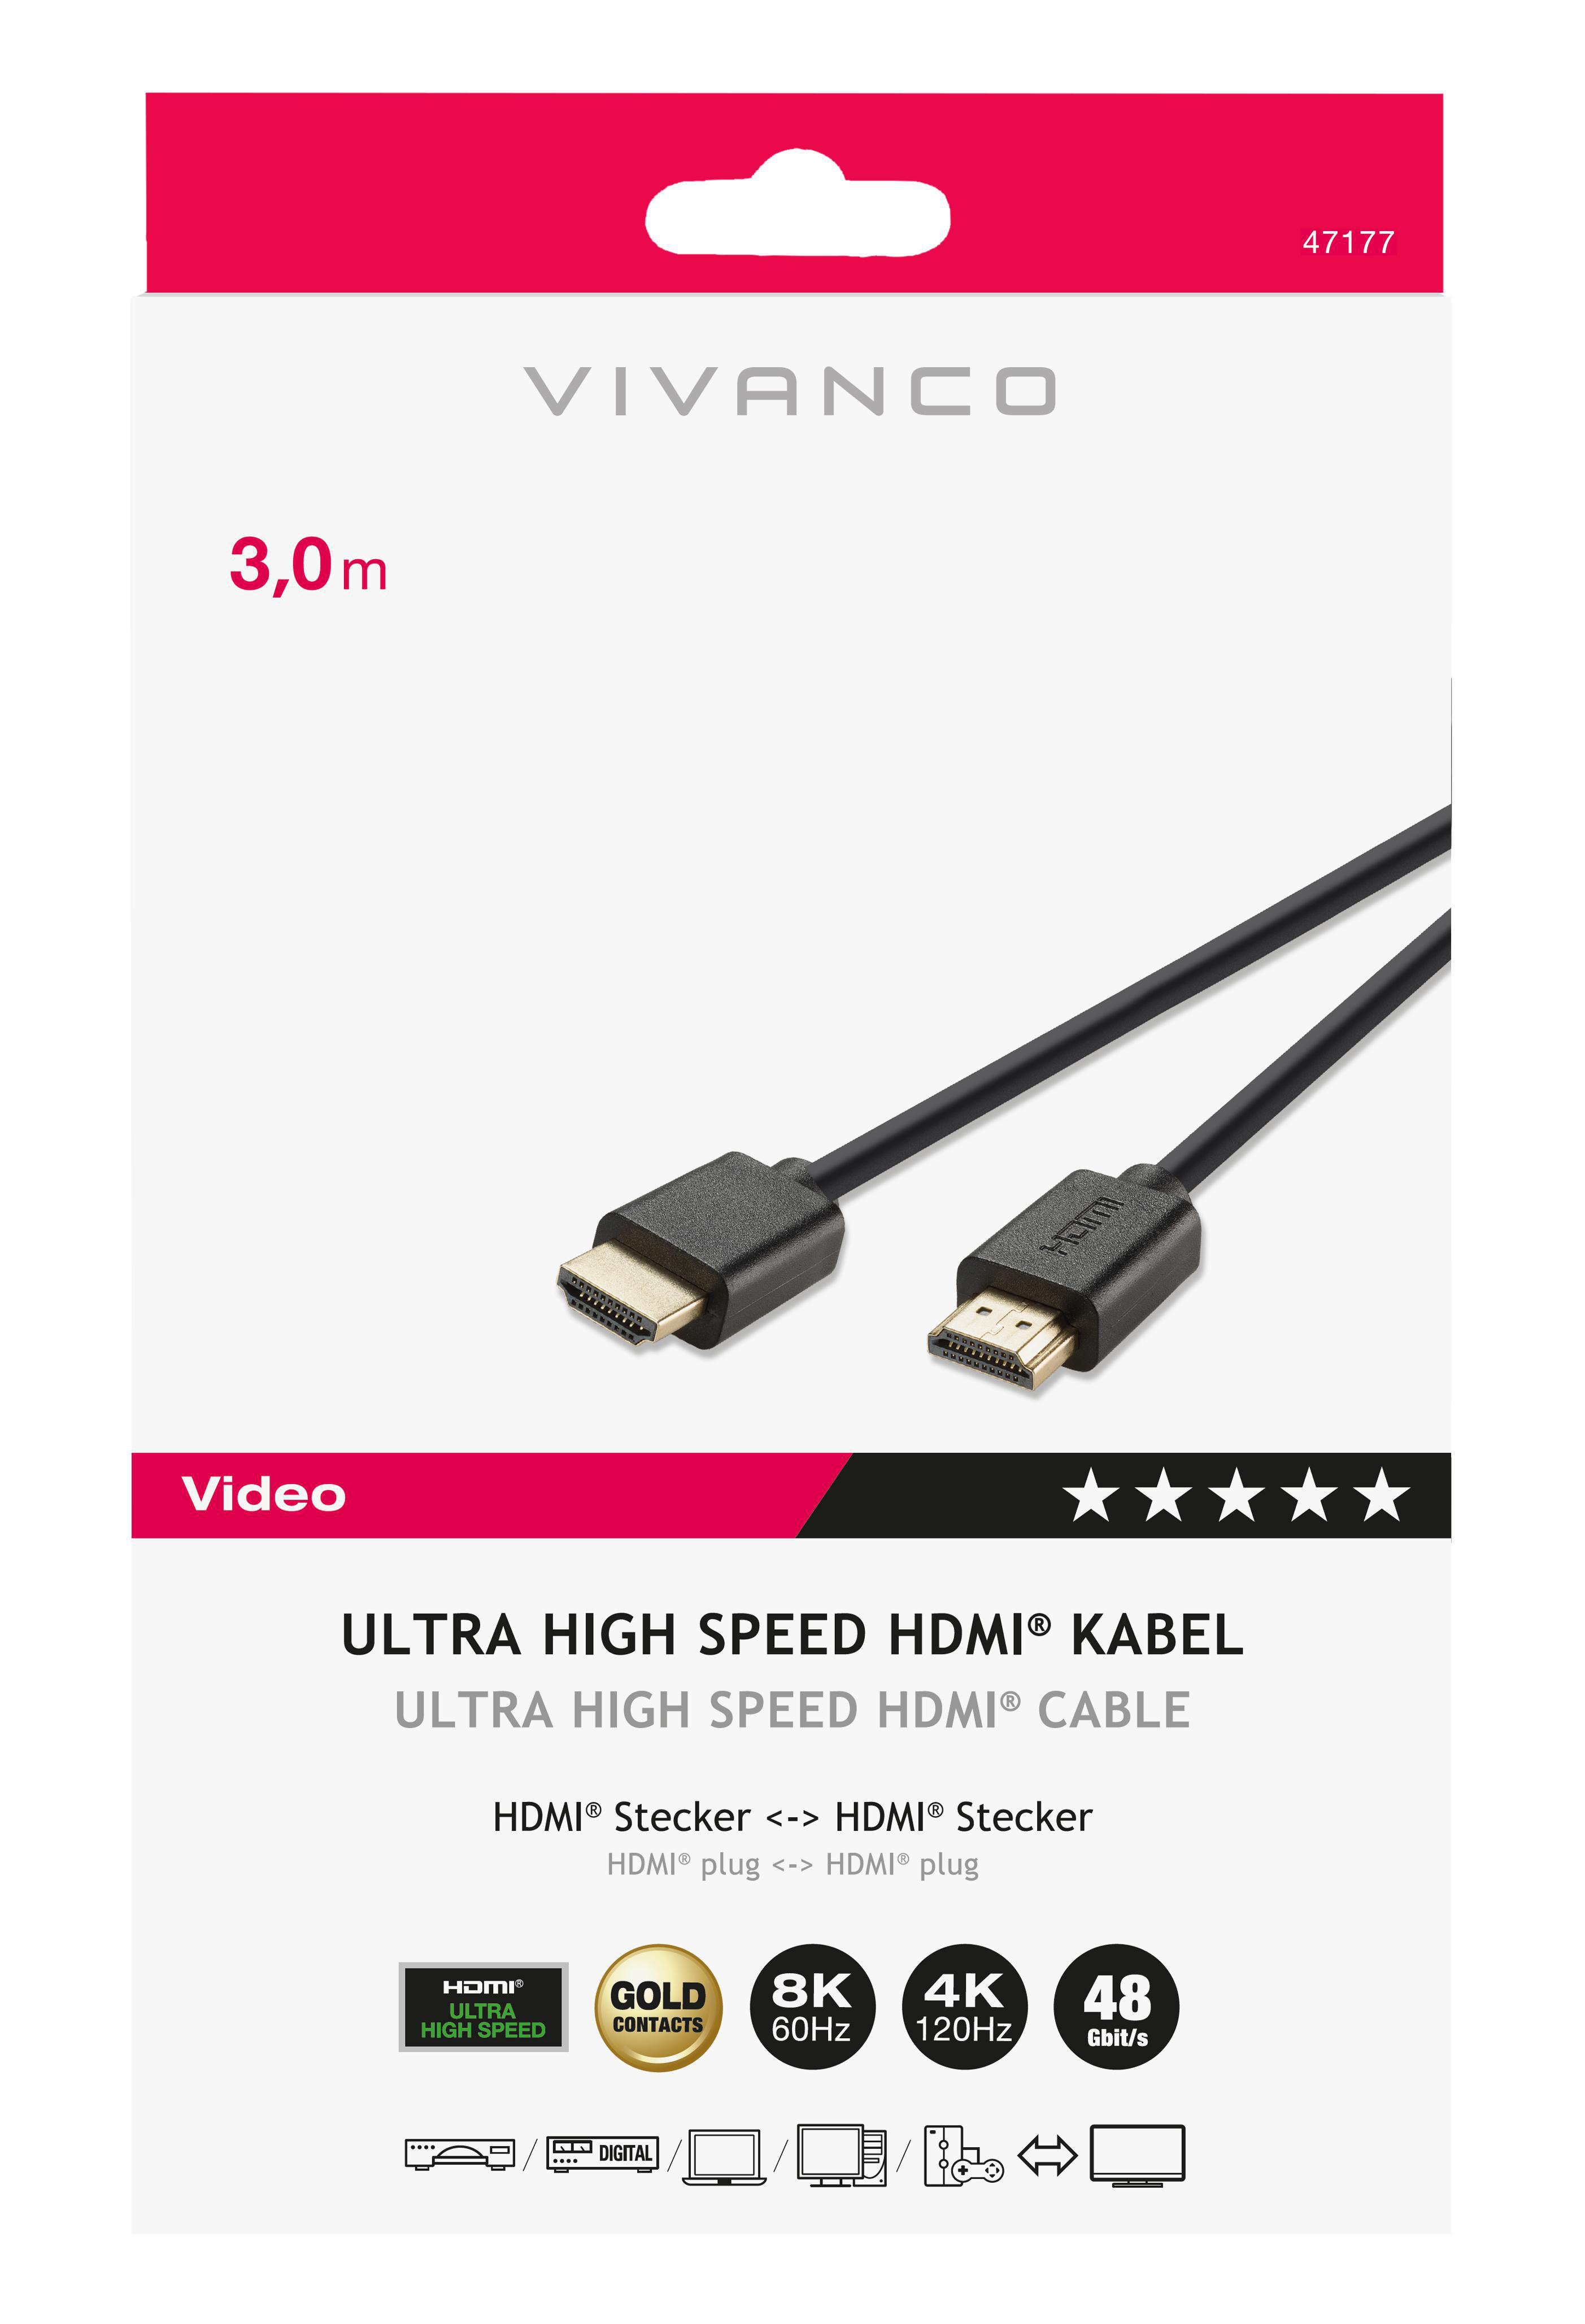 VIVANCO 47177, Kabel, m HDMI 3